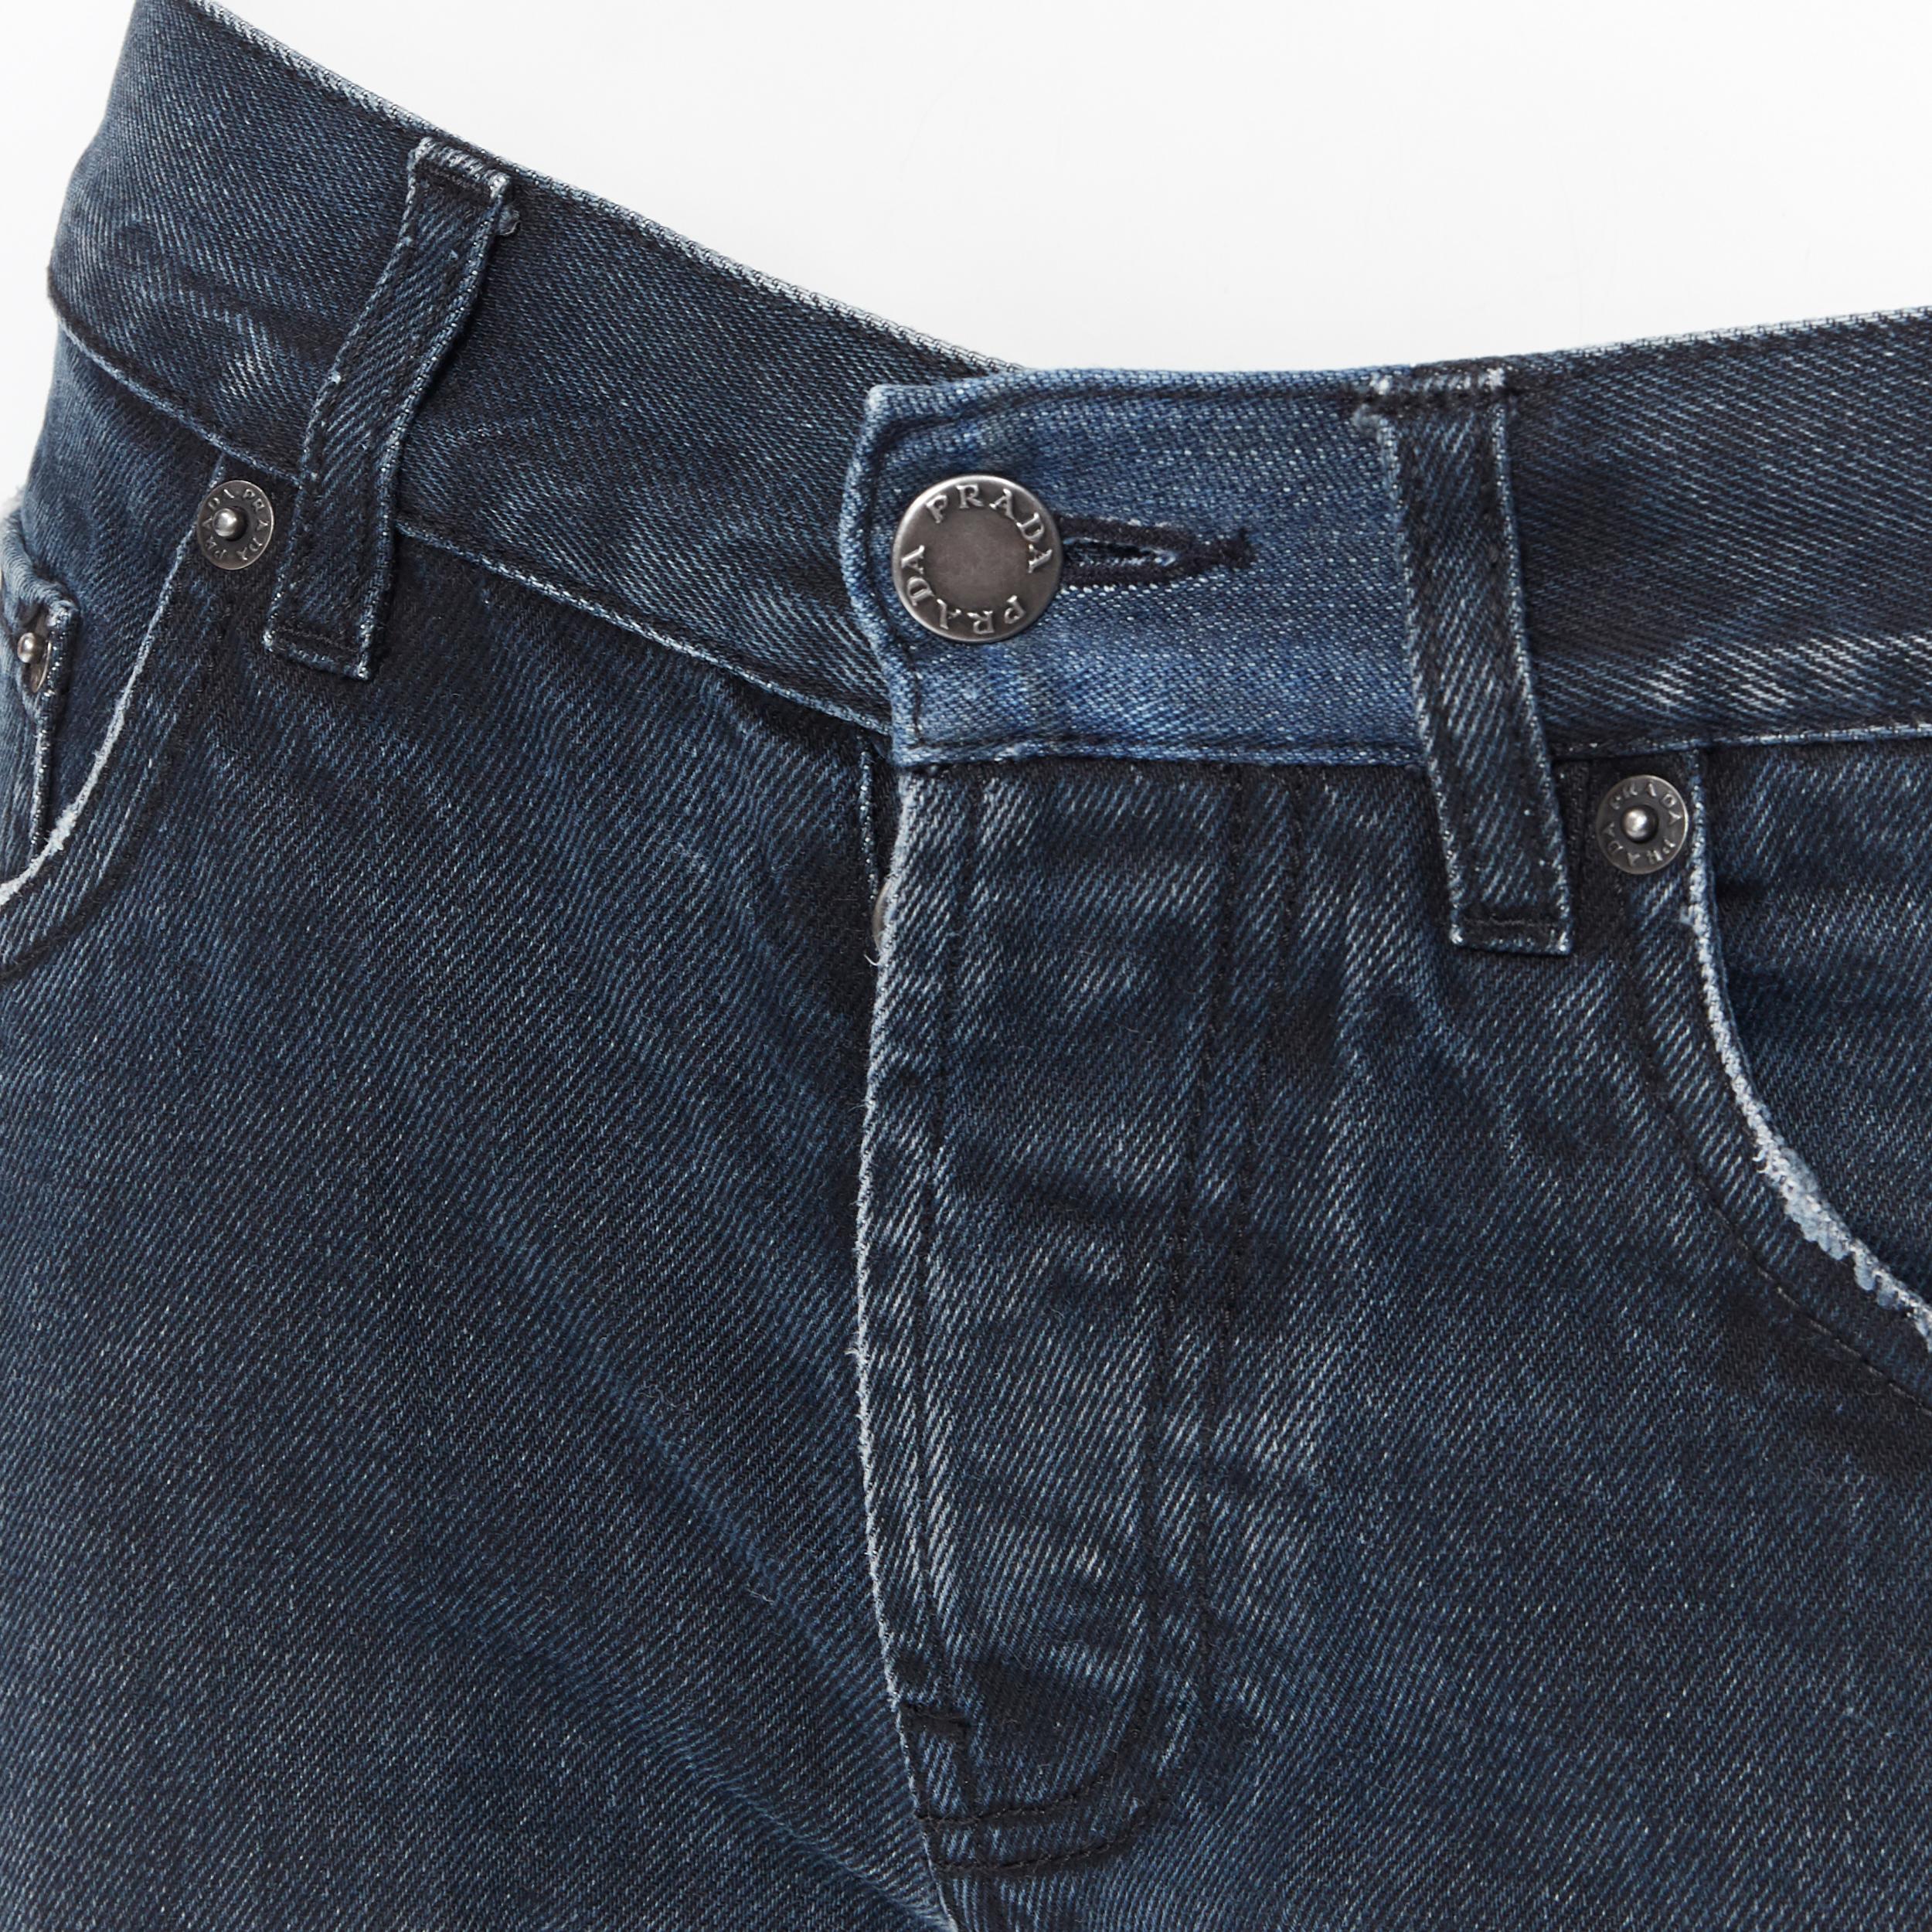 Men's PRADA dark grey washed denim button fly tapered fit slim leg pants jeans 28